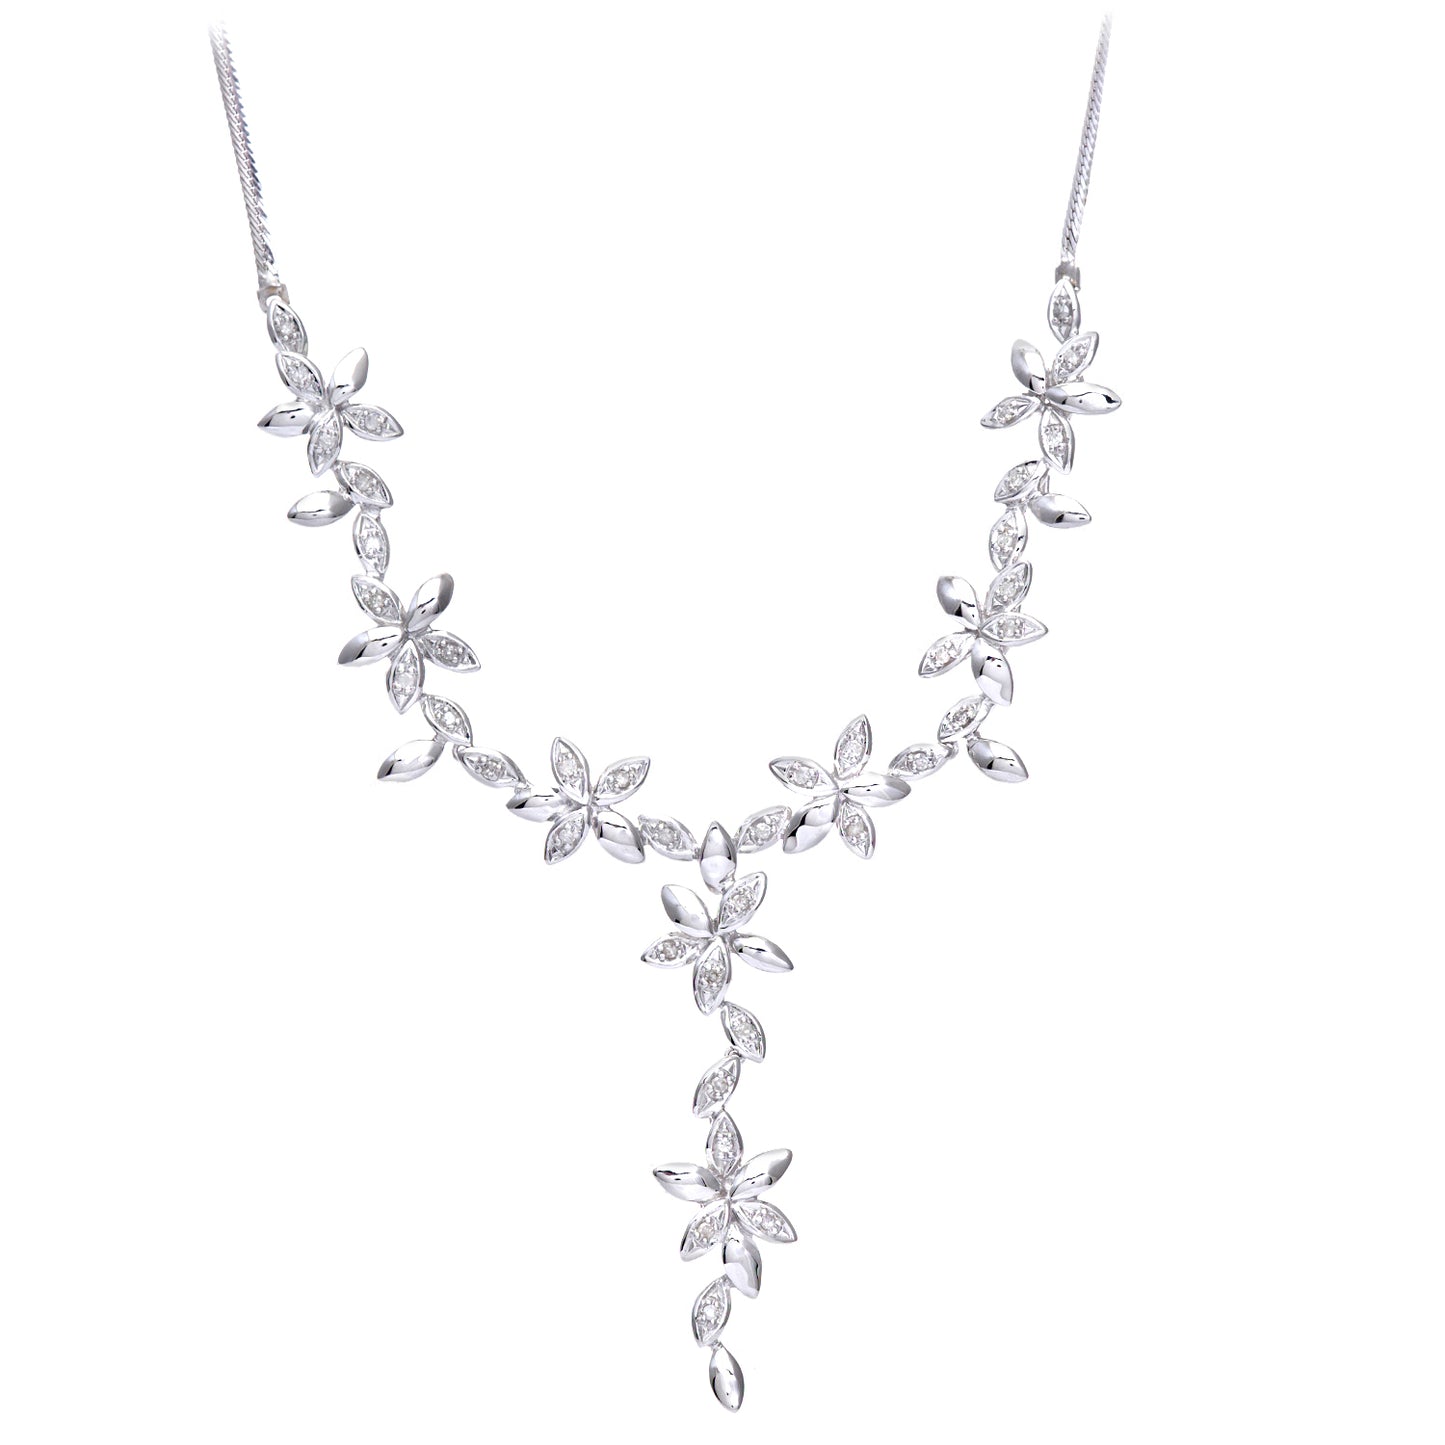 9ct White Gold  22pts Diamond Flower Lavalier Necklace 18 inch - PNEAXL01627W